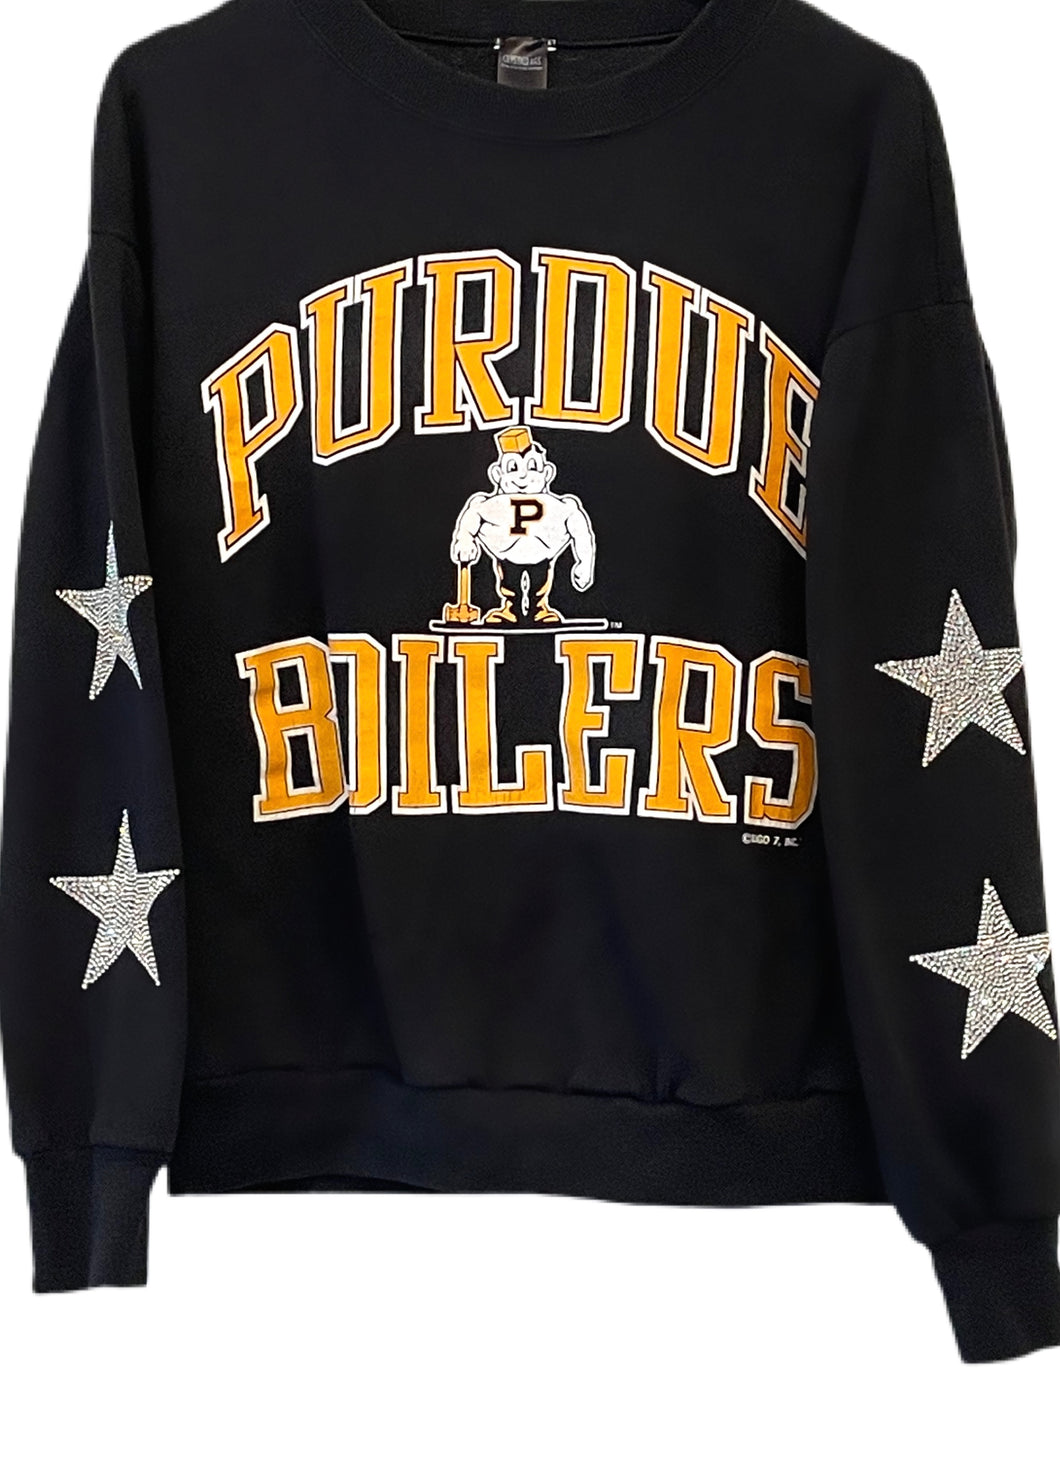 Purdue University, One of a KIND Vintage Sweatshirt with Crystal Star Design